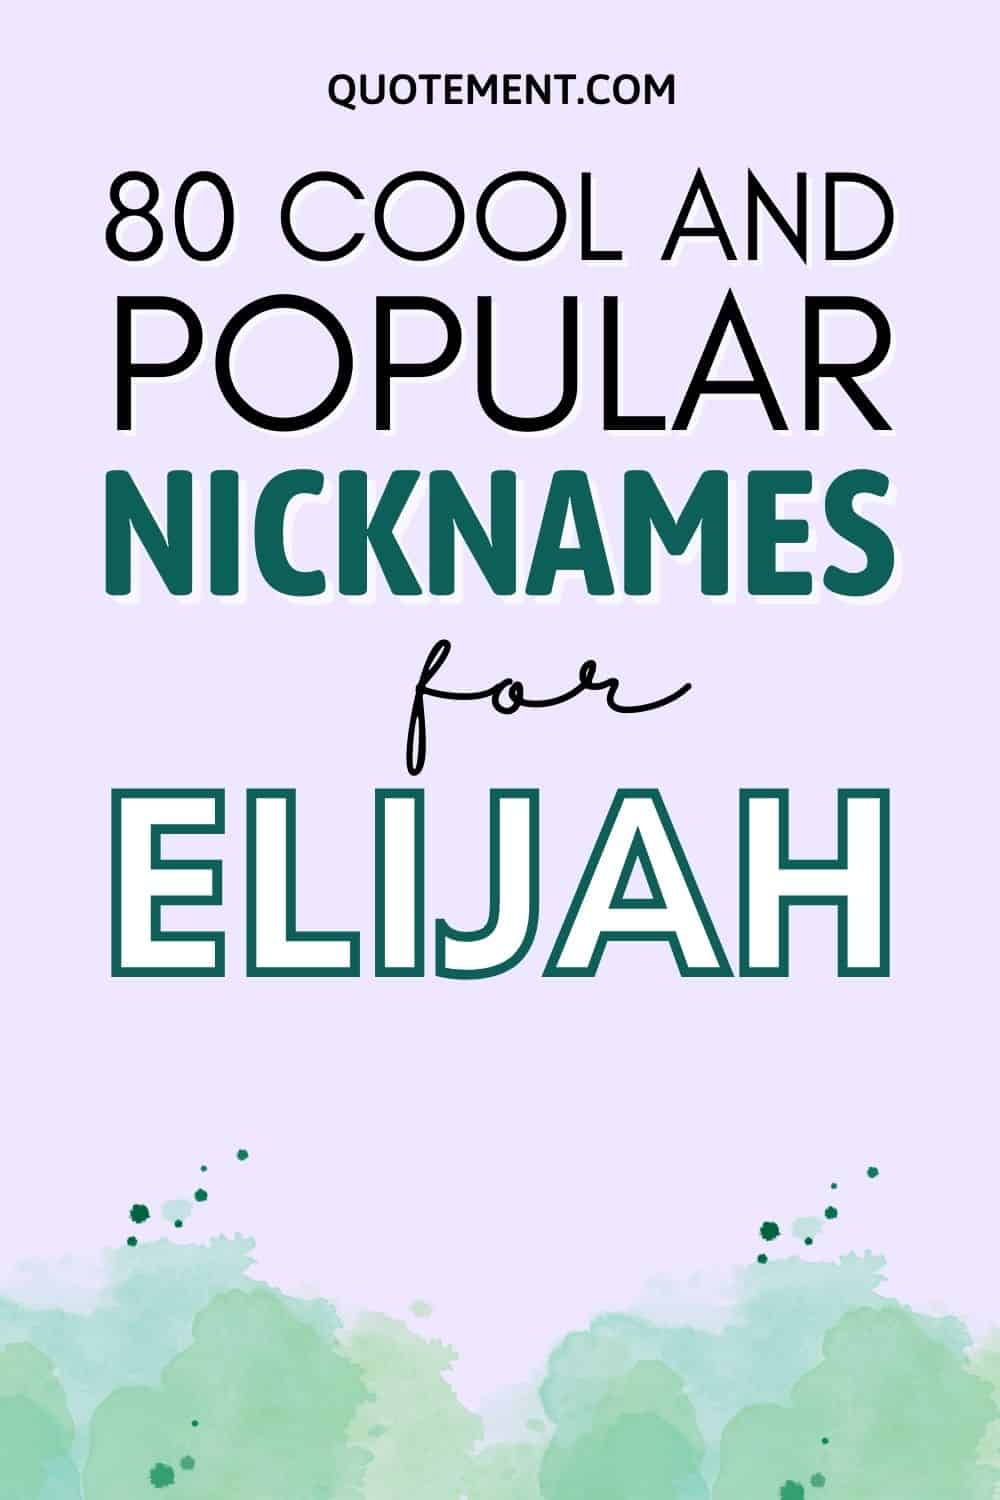 Nicknames For Elijah 80 Cool And Popular Nicknames